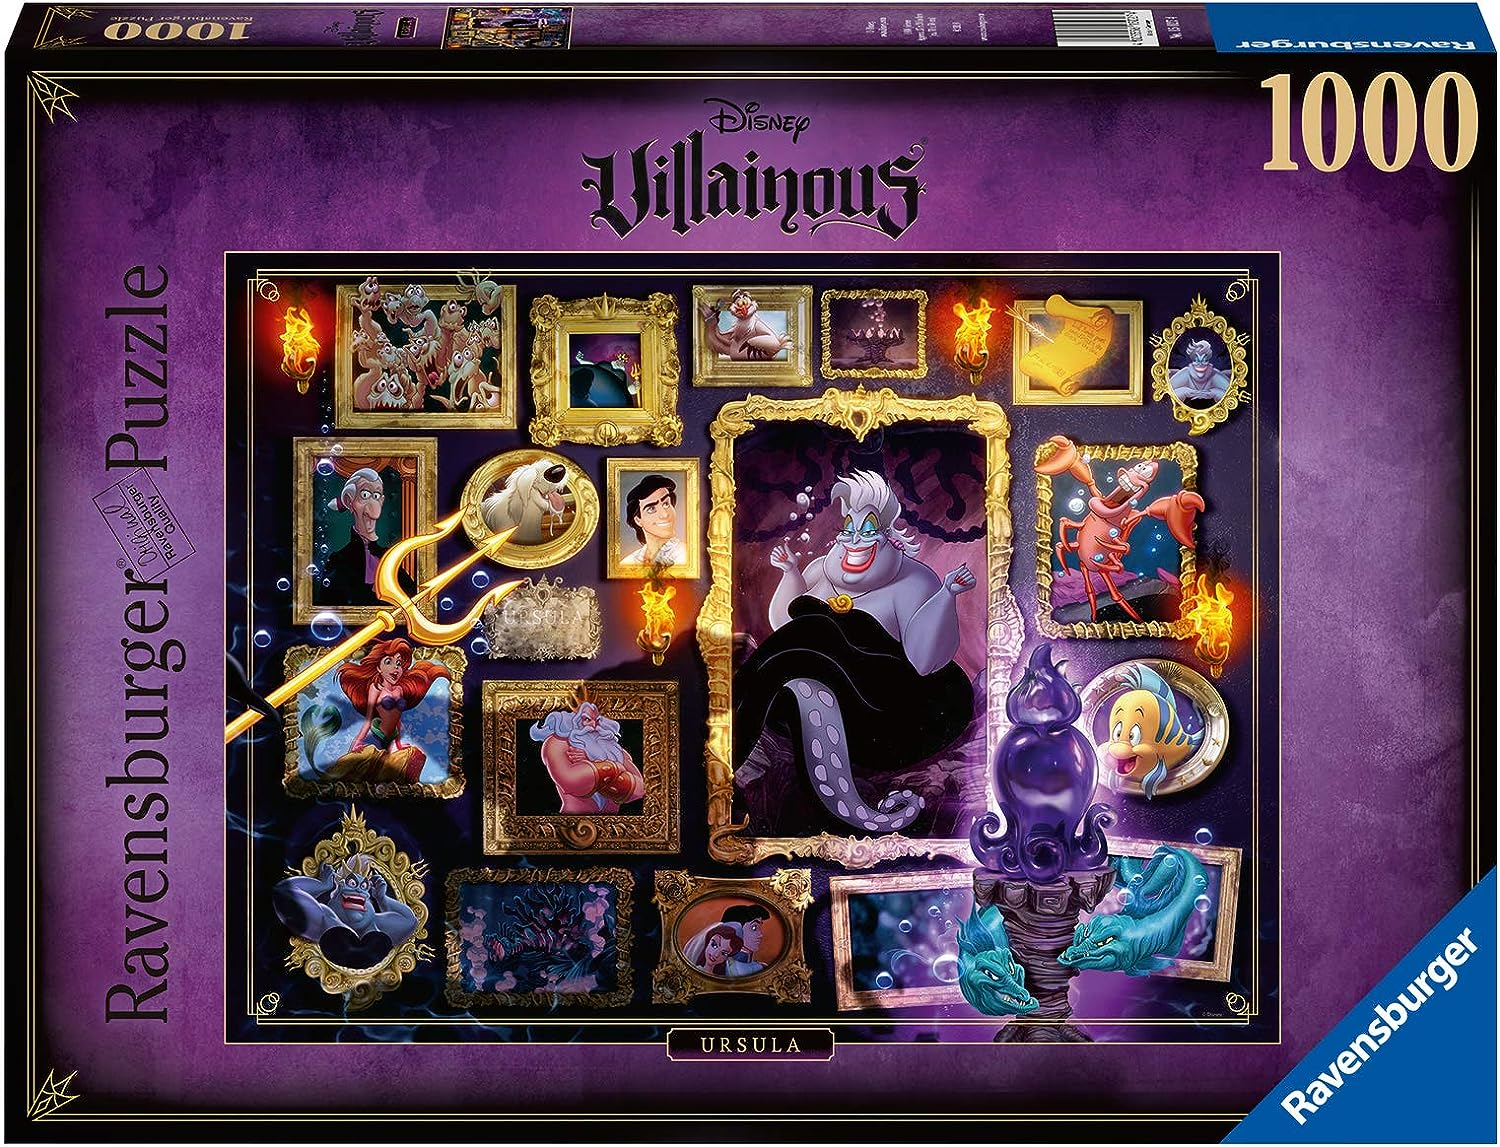 Ravensburger Puzzles (1000): Disney Villainous: Ursula 